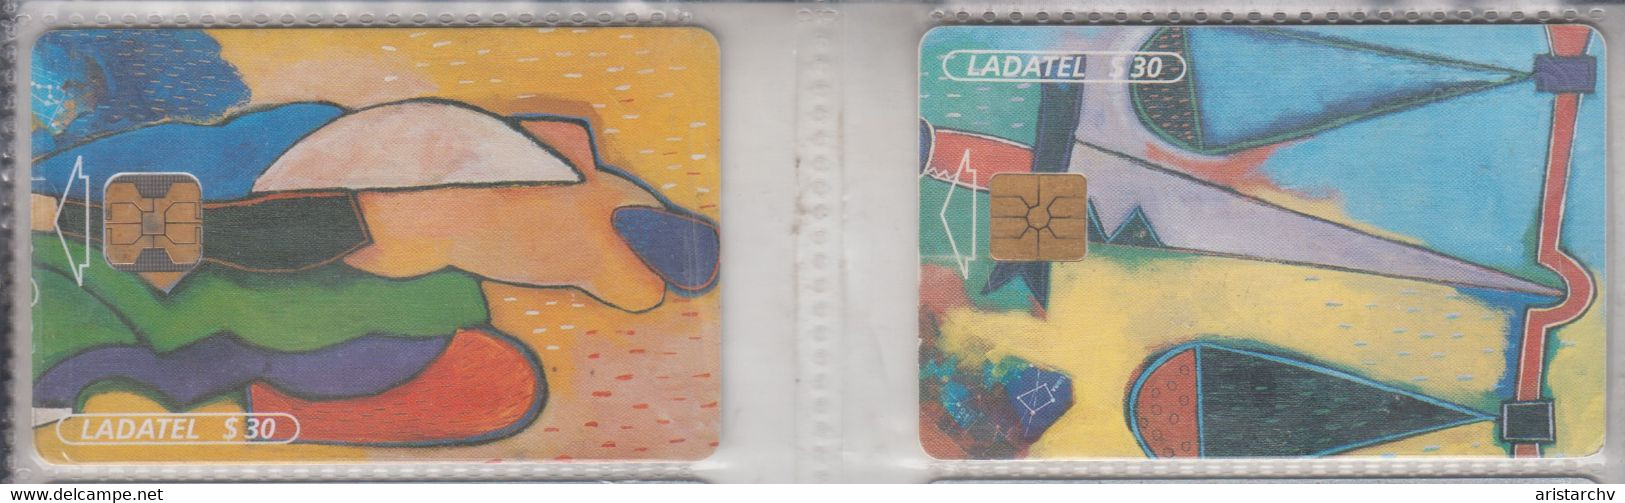 MEXICO 2000 ZODIAC HOROSCOPE LUNAR CALENDAR SET OF 12 PHONE CARDS - Sternzeichen